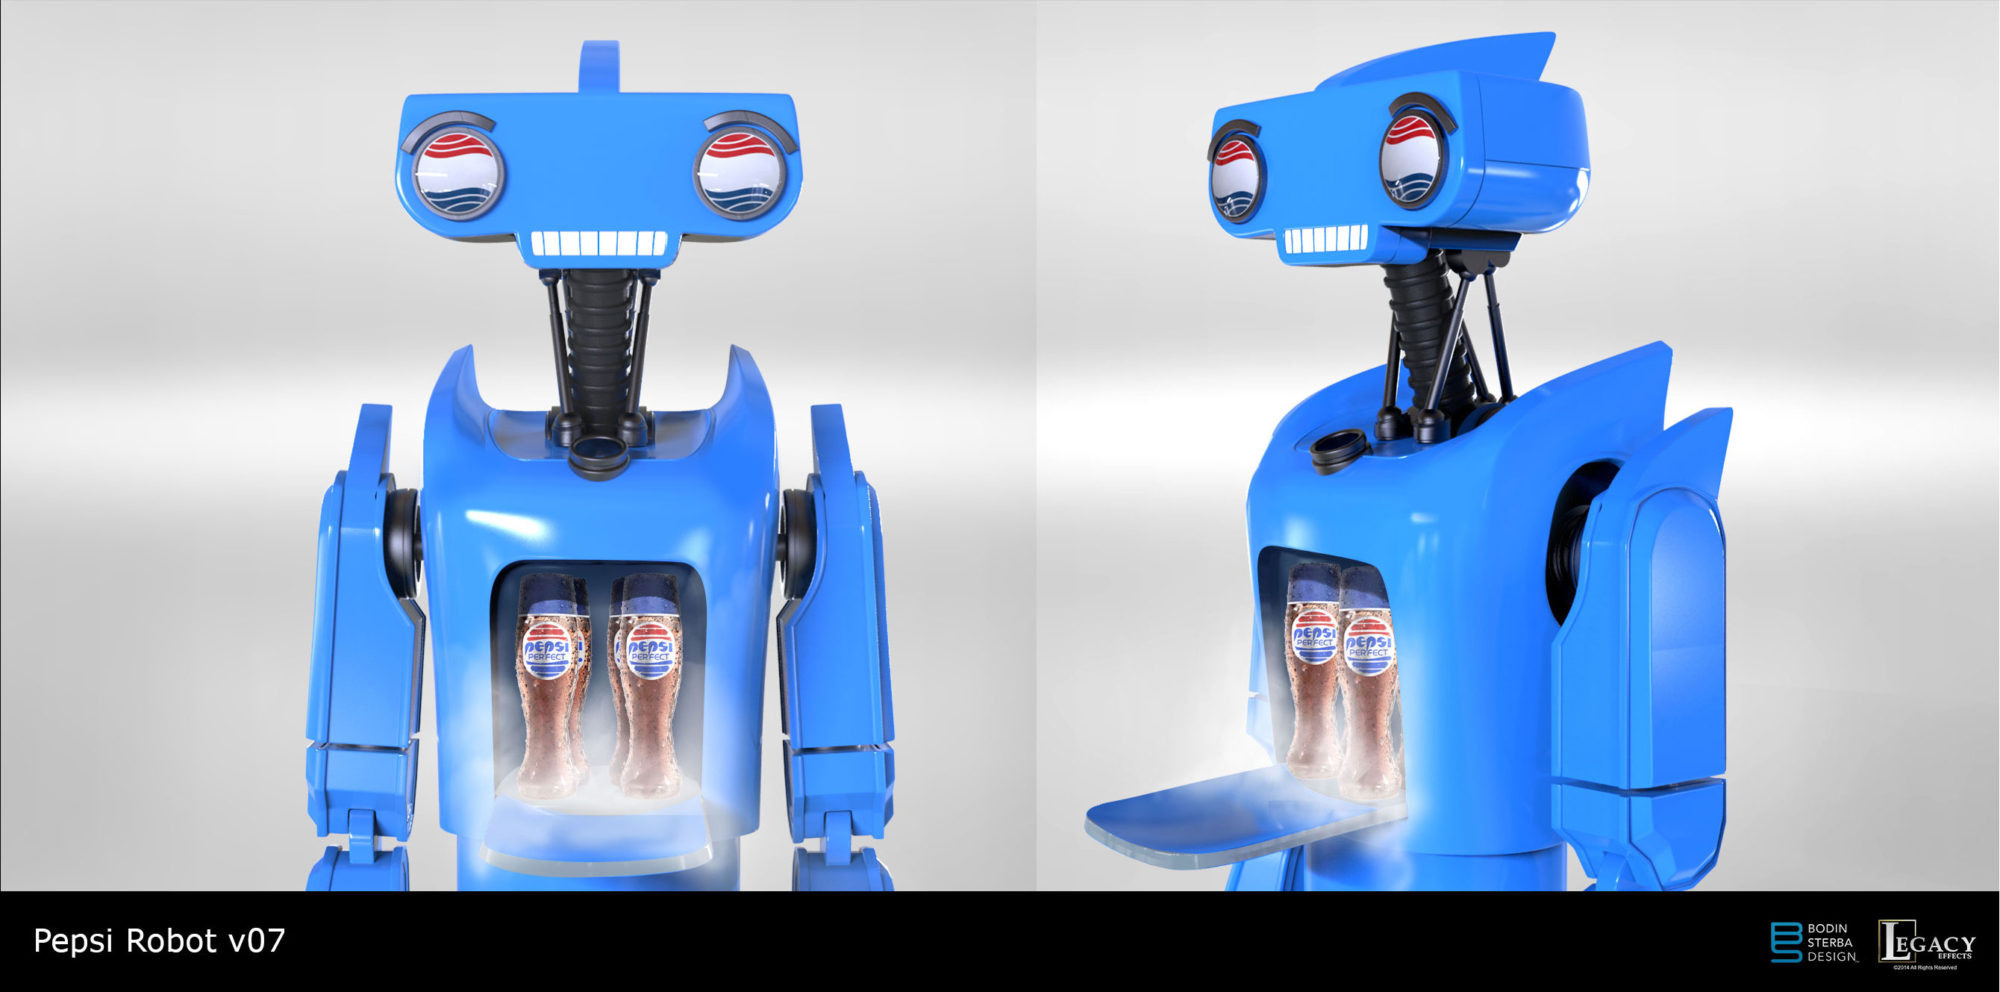 Pepsi Perfect Back to the Future Robot Design v07